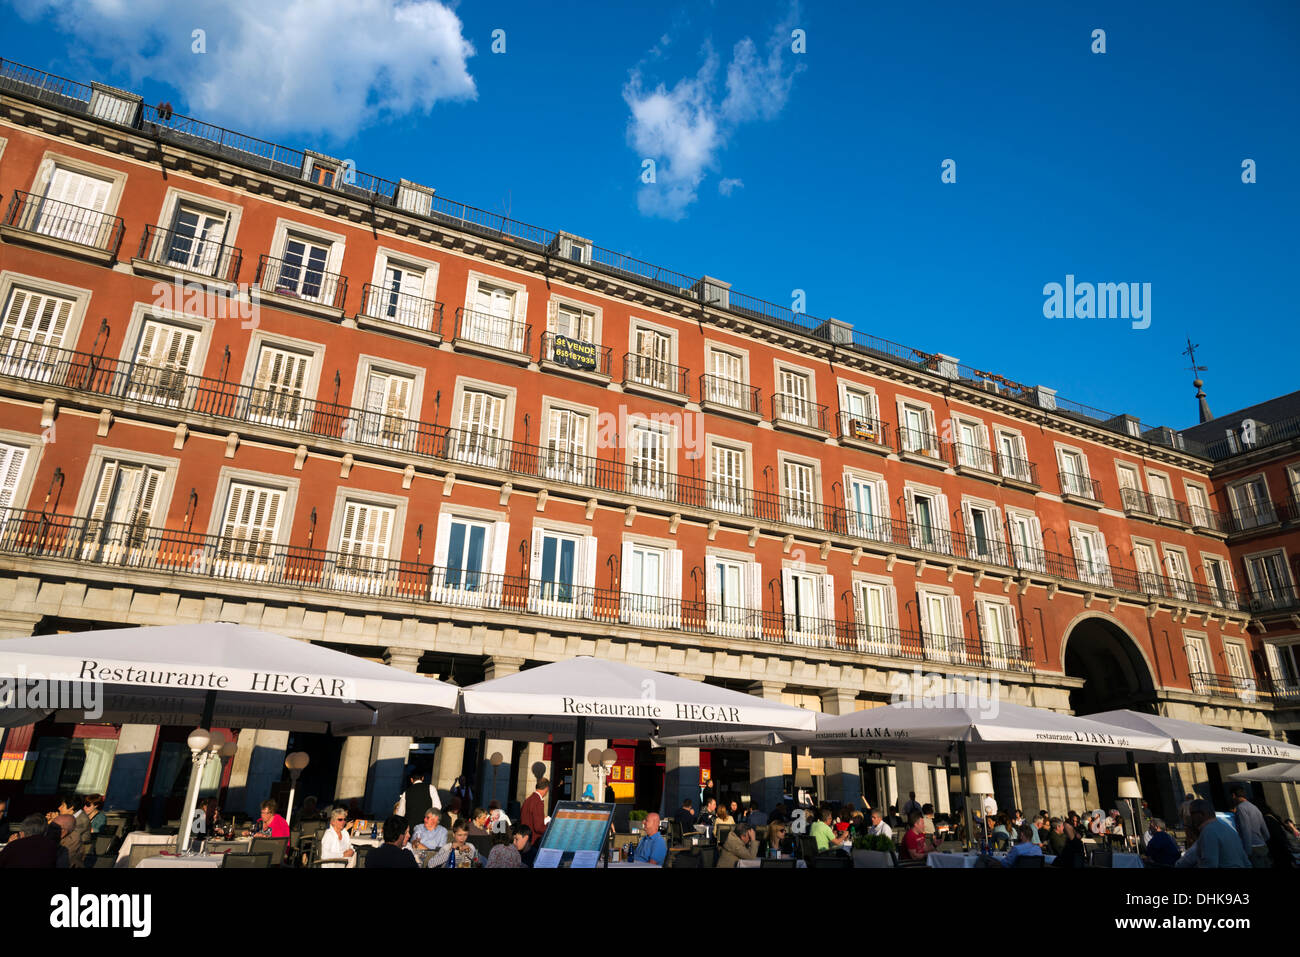 Restaurants dans la Plaza Mayor, Madrid, Espagne Banque D'Images